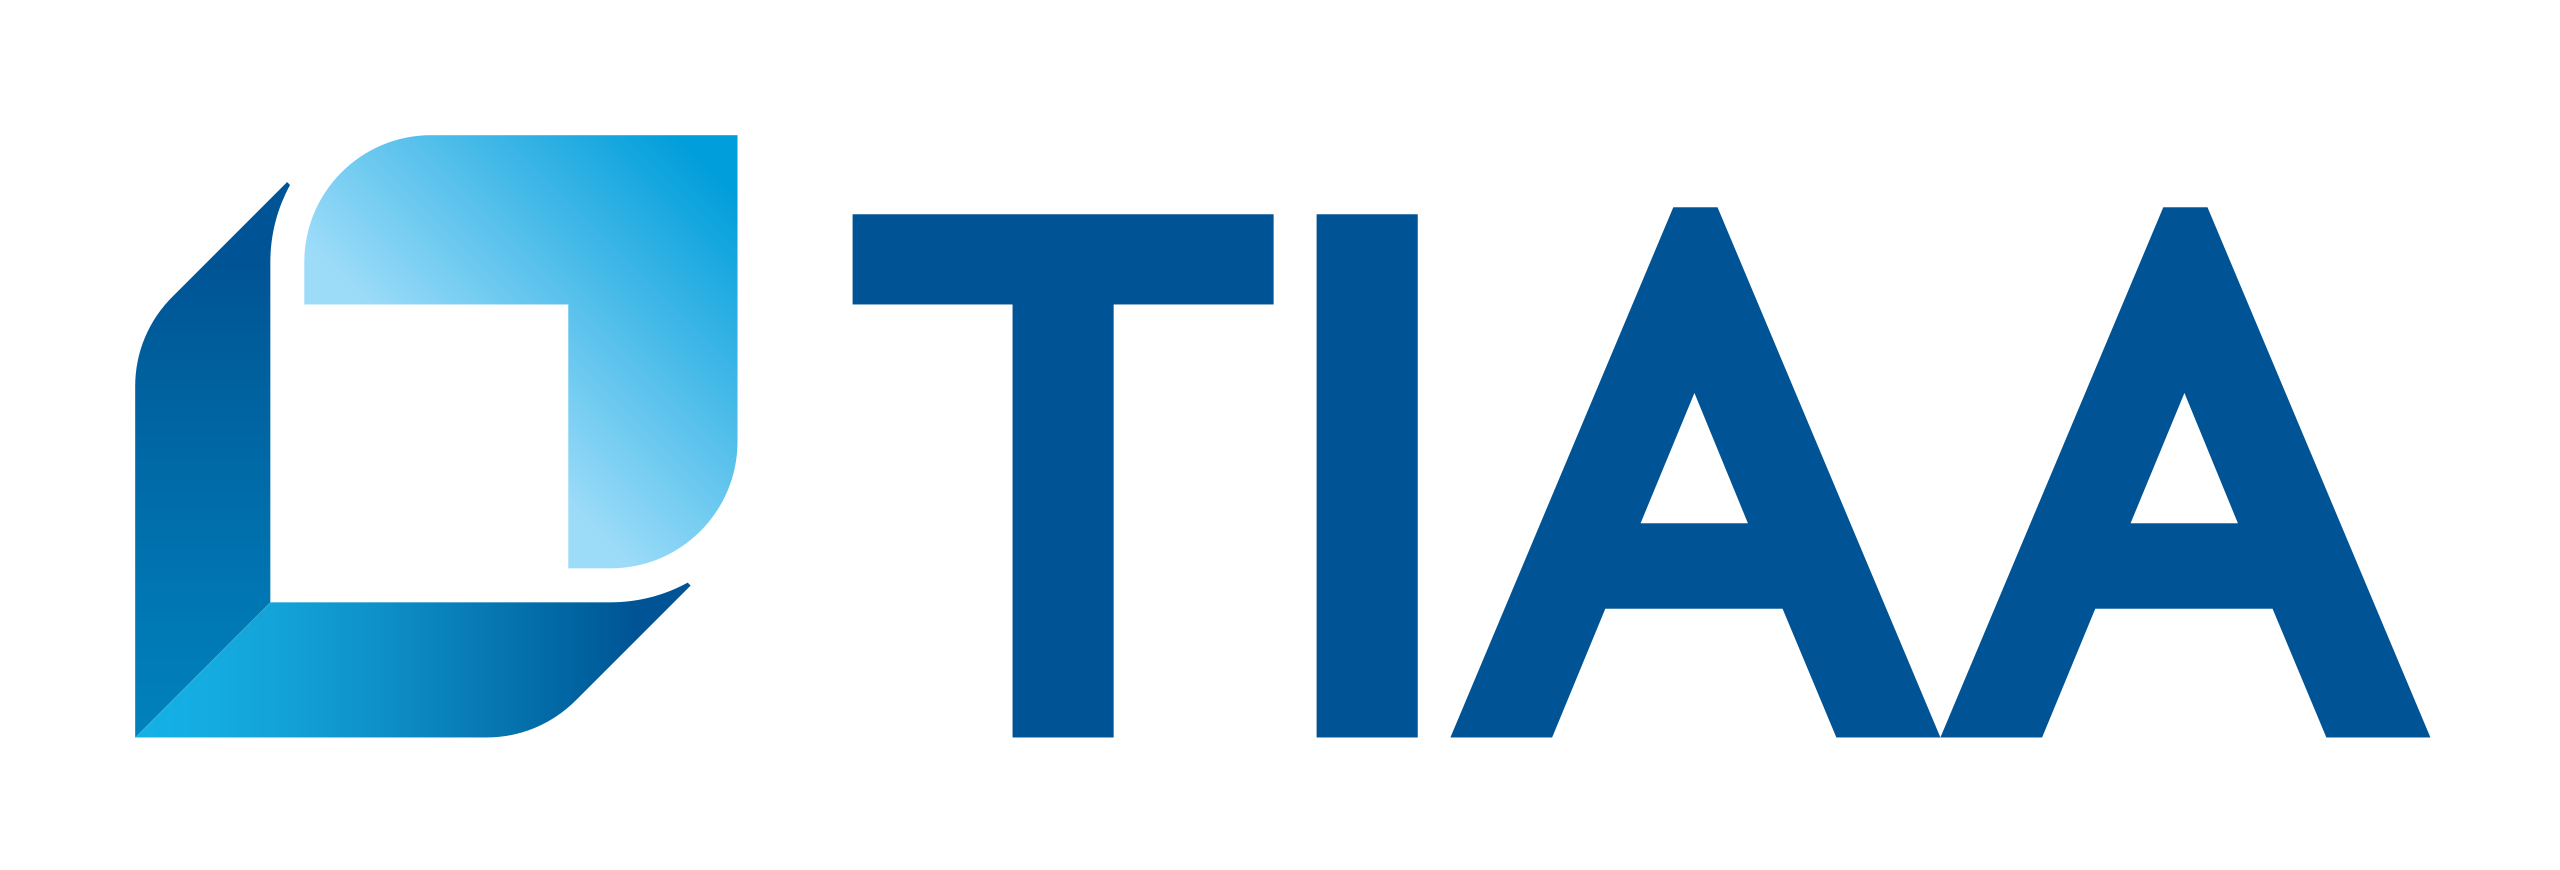 tiaa-logo.png